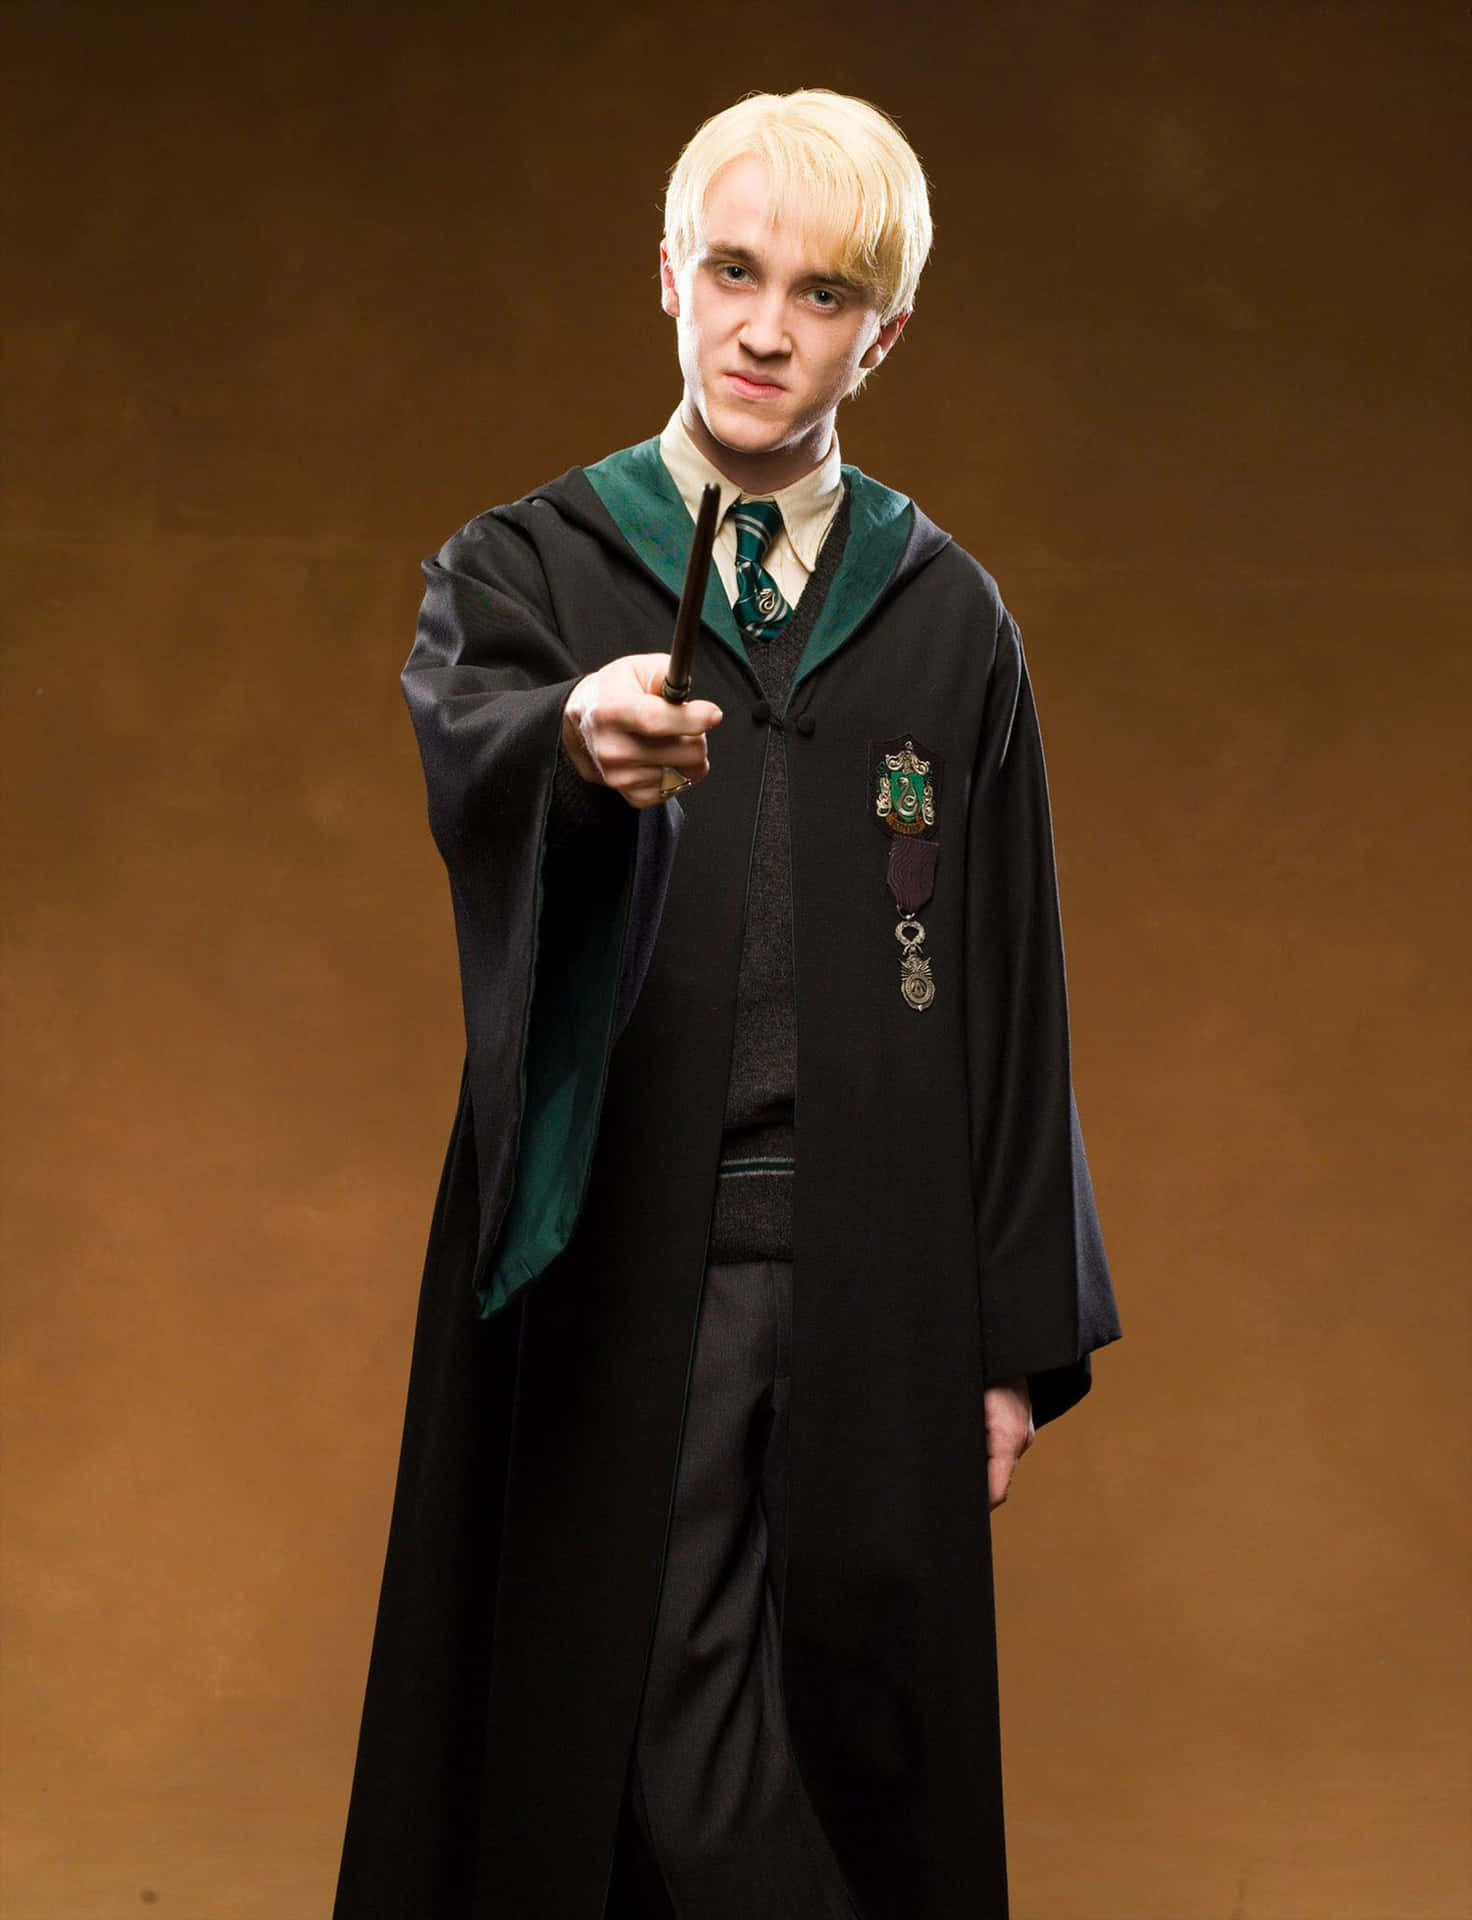 Draco Malfoy in Hogwarts robes